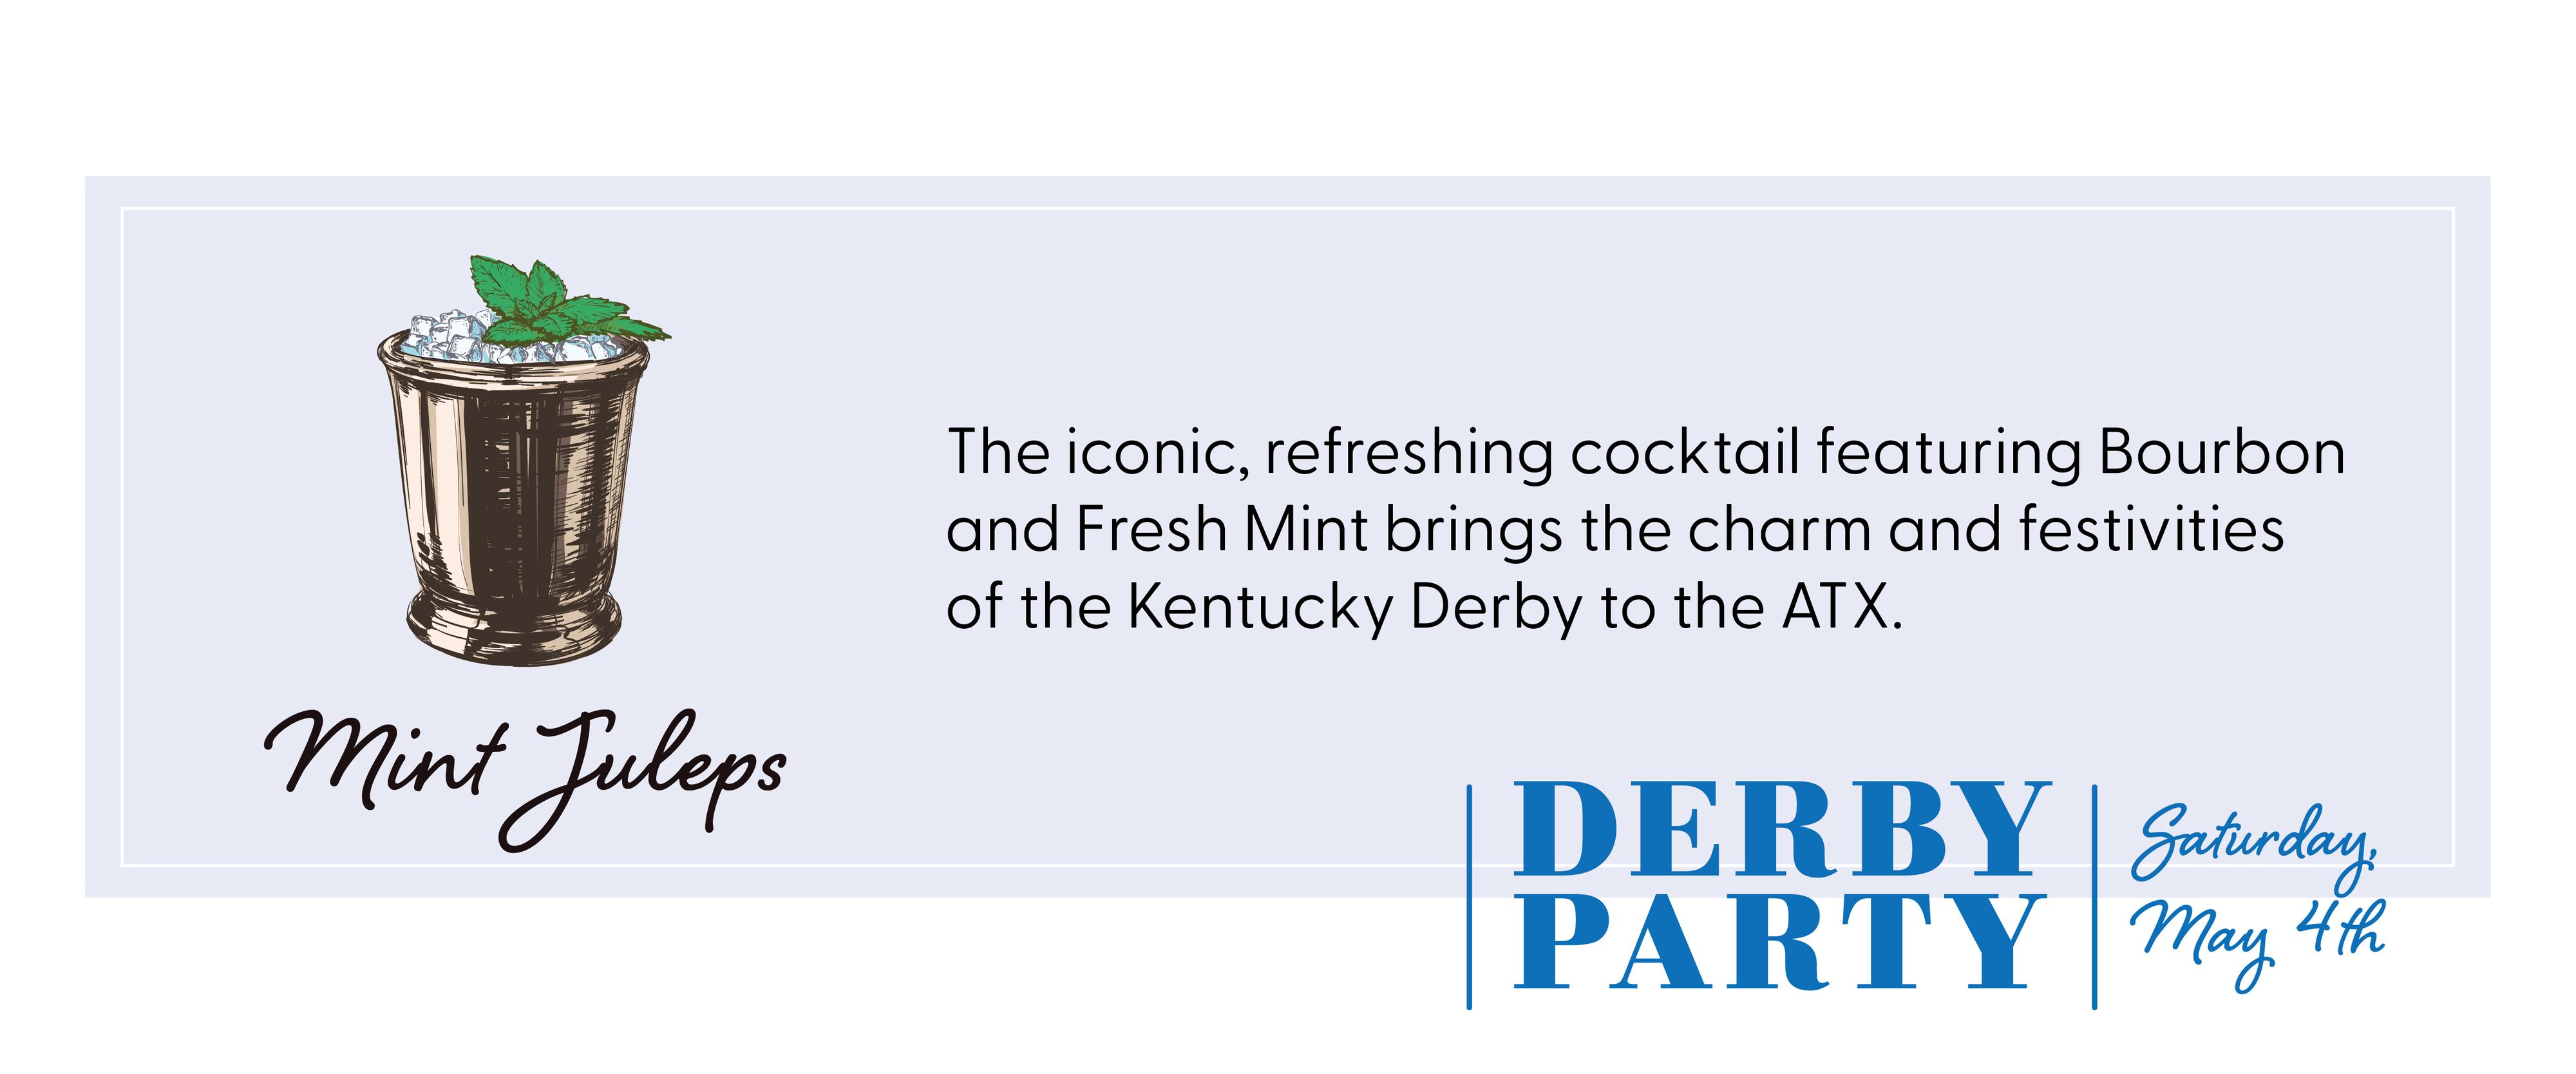 Website Sliders - Kentucky Derby-02.jpg